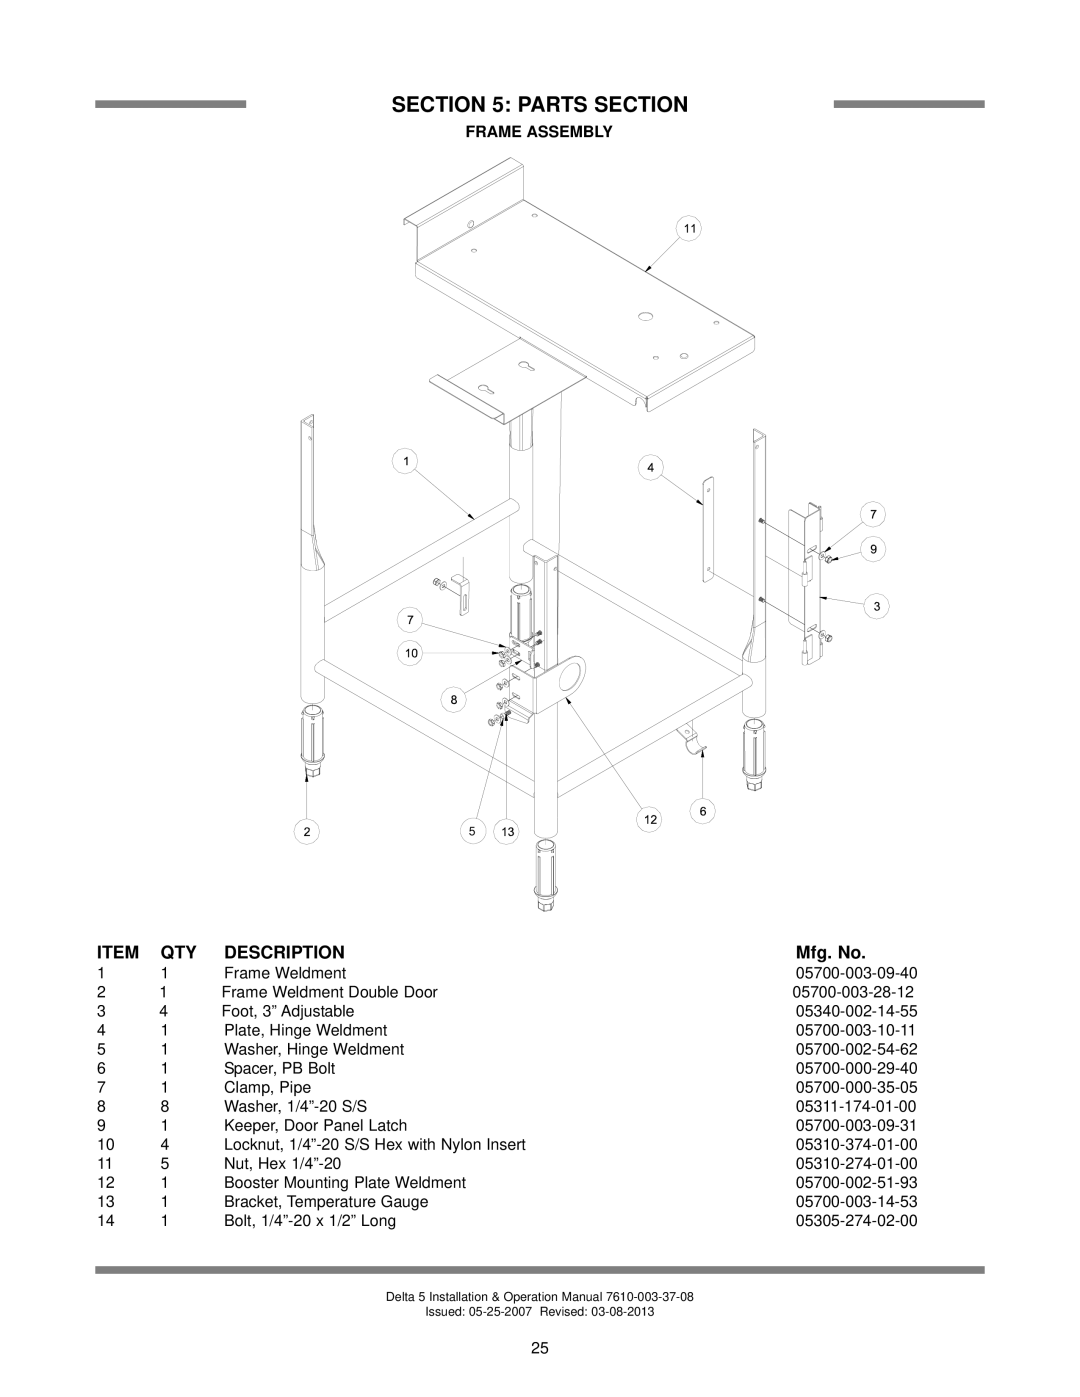 Jackson Chemical Sanitizing Dishmachine technical manual Frame Assembly, Parts Section, Description, Mfg. No 